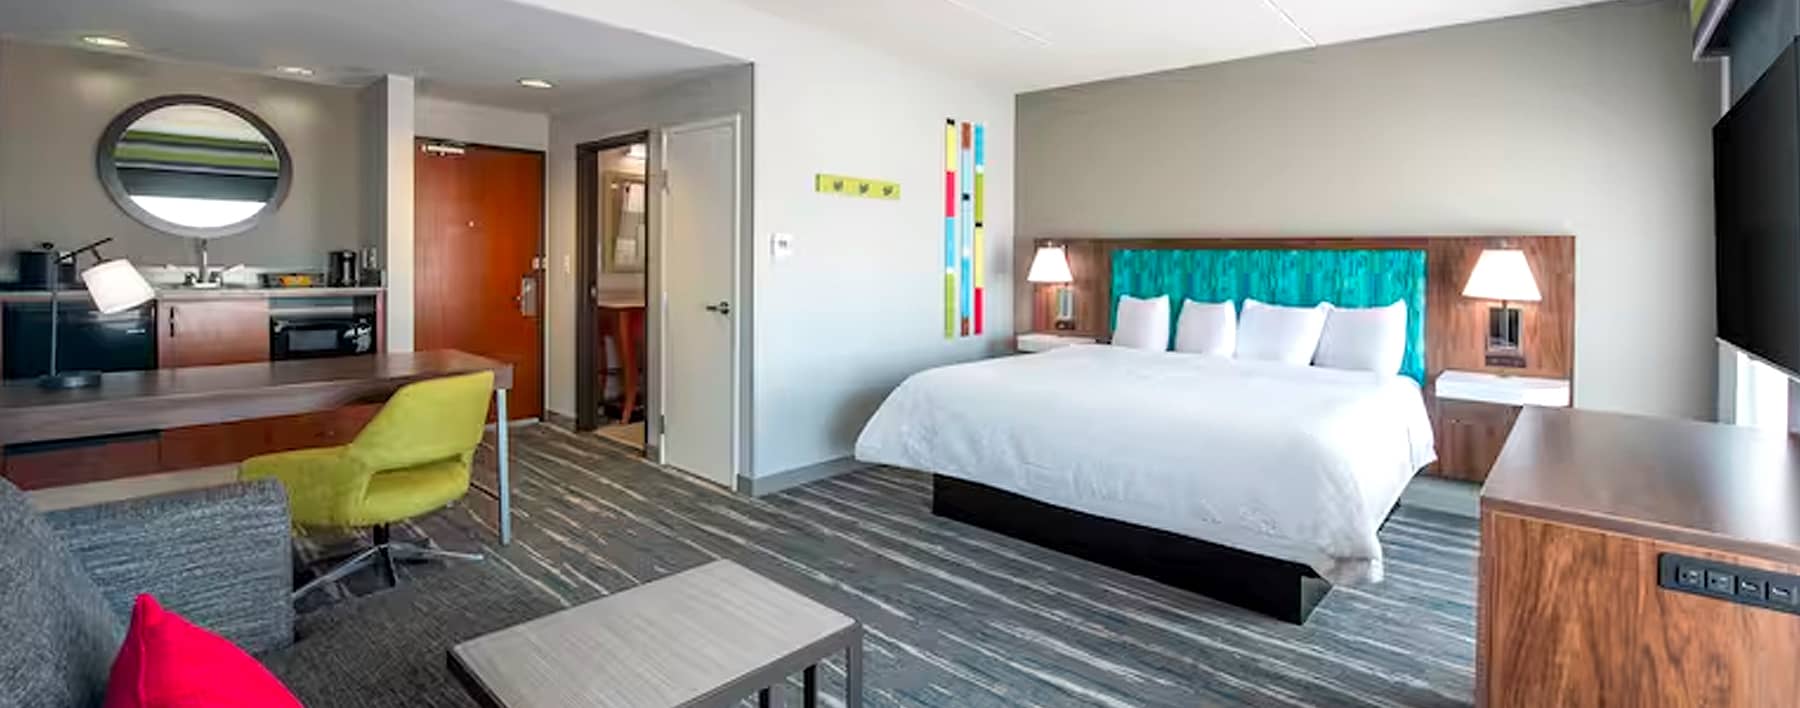 Hampton Inn & Suites - Dallas/Allen, Texas | GLR, Inc.